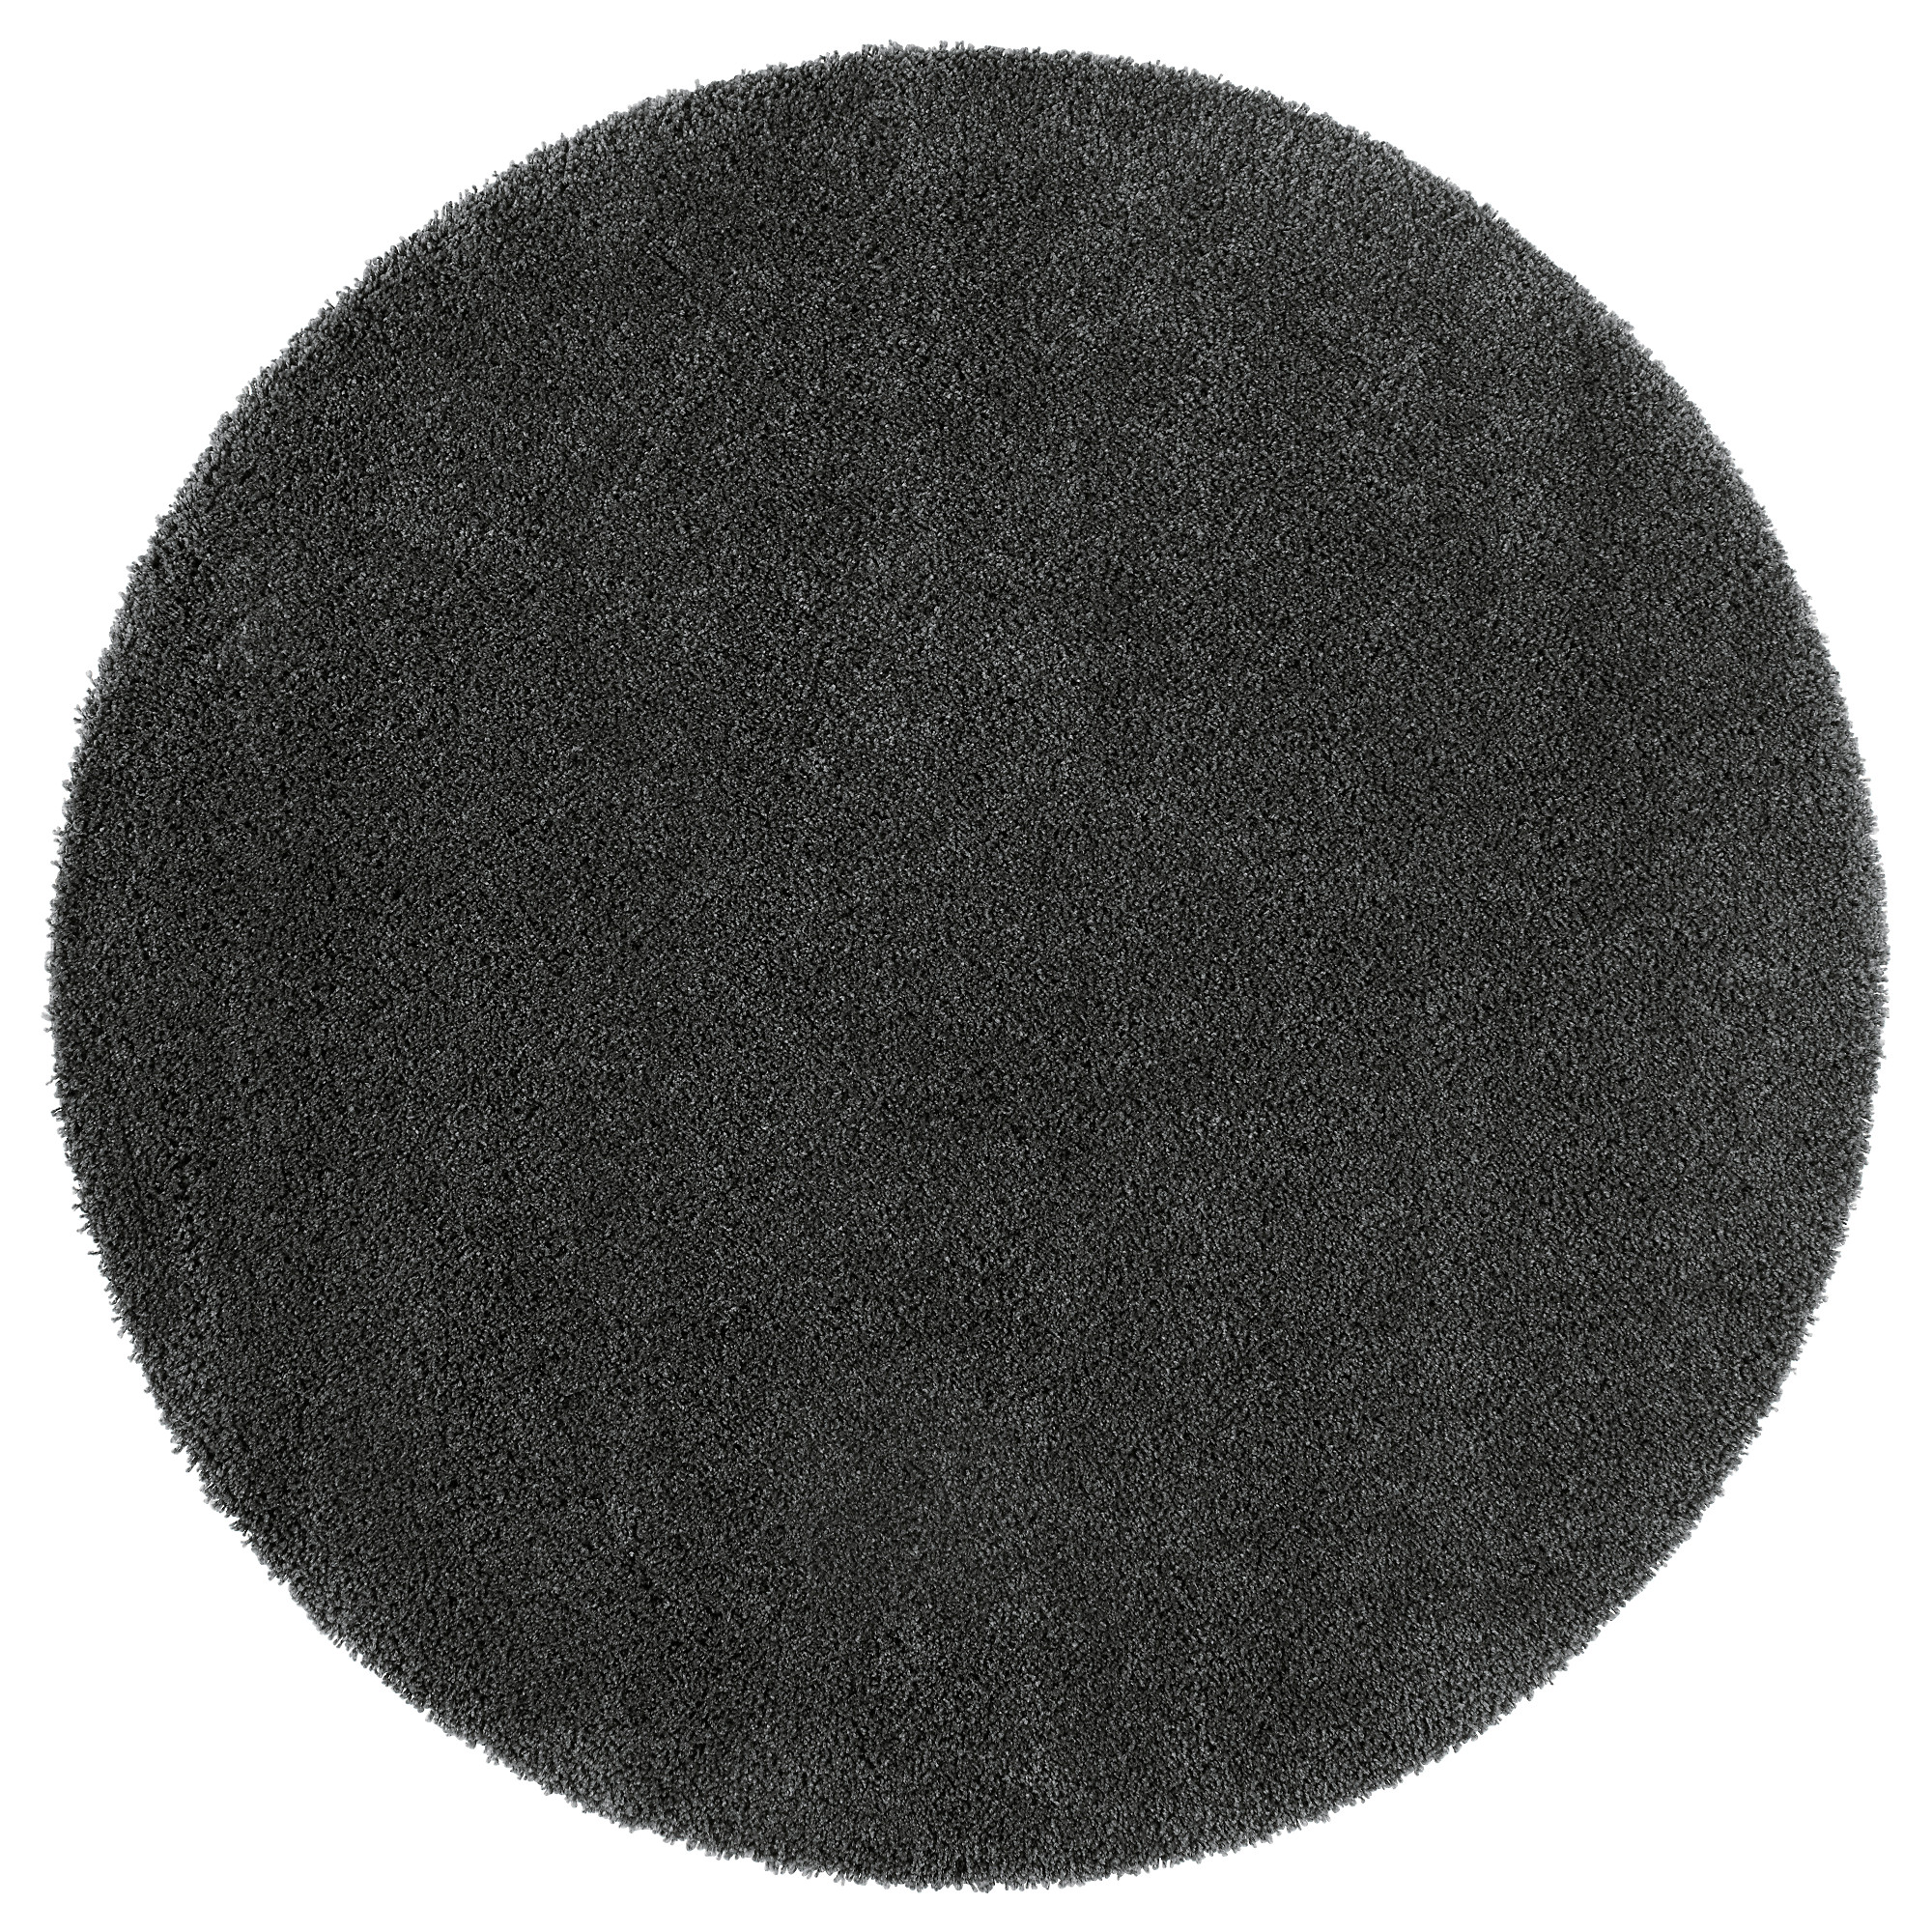 circular rug photo 3 of 5 ådum rug, high pile, dark gray diameter: 4 u0027 PWGRYBP